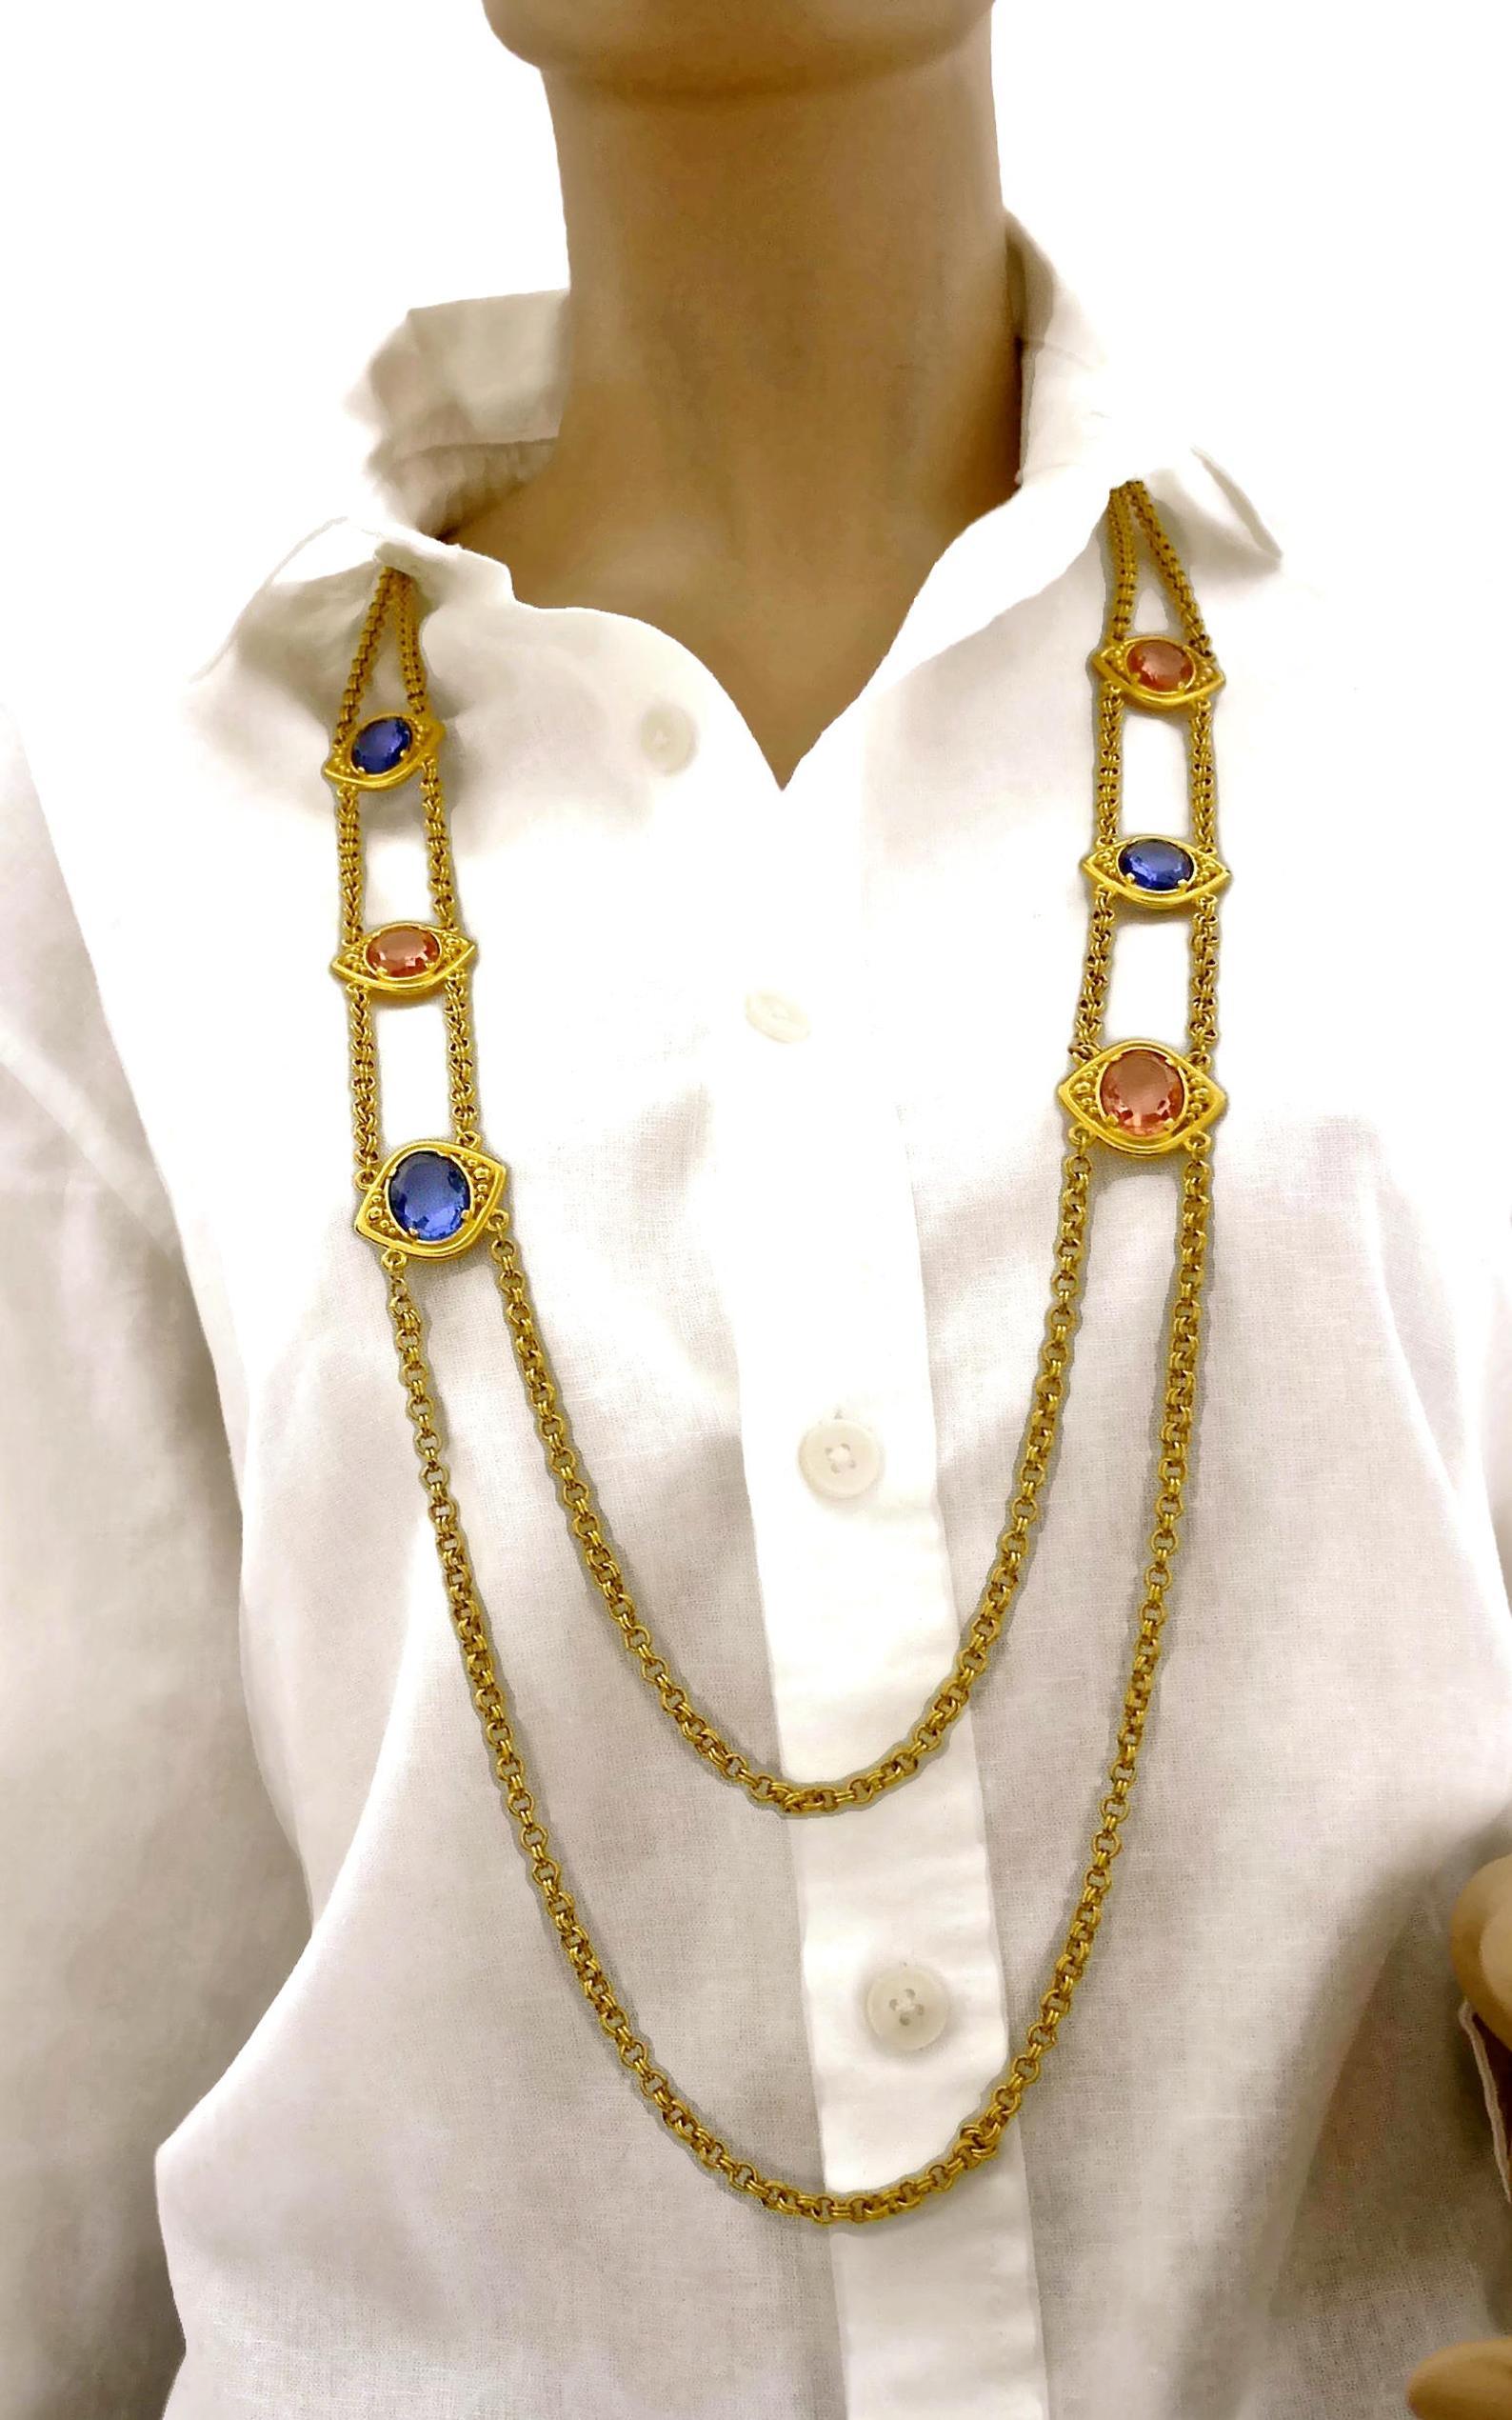 ysl necklace vintage